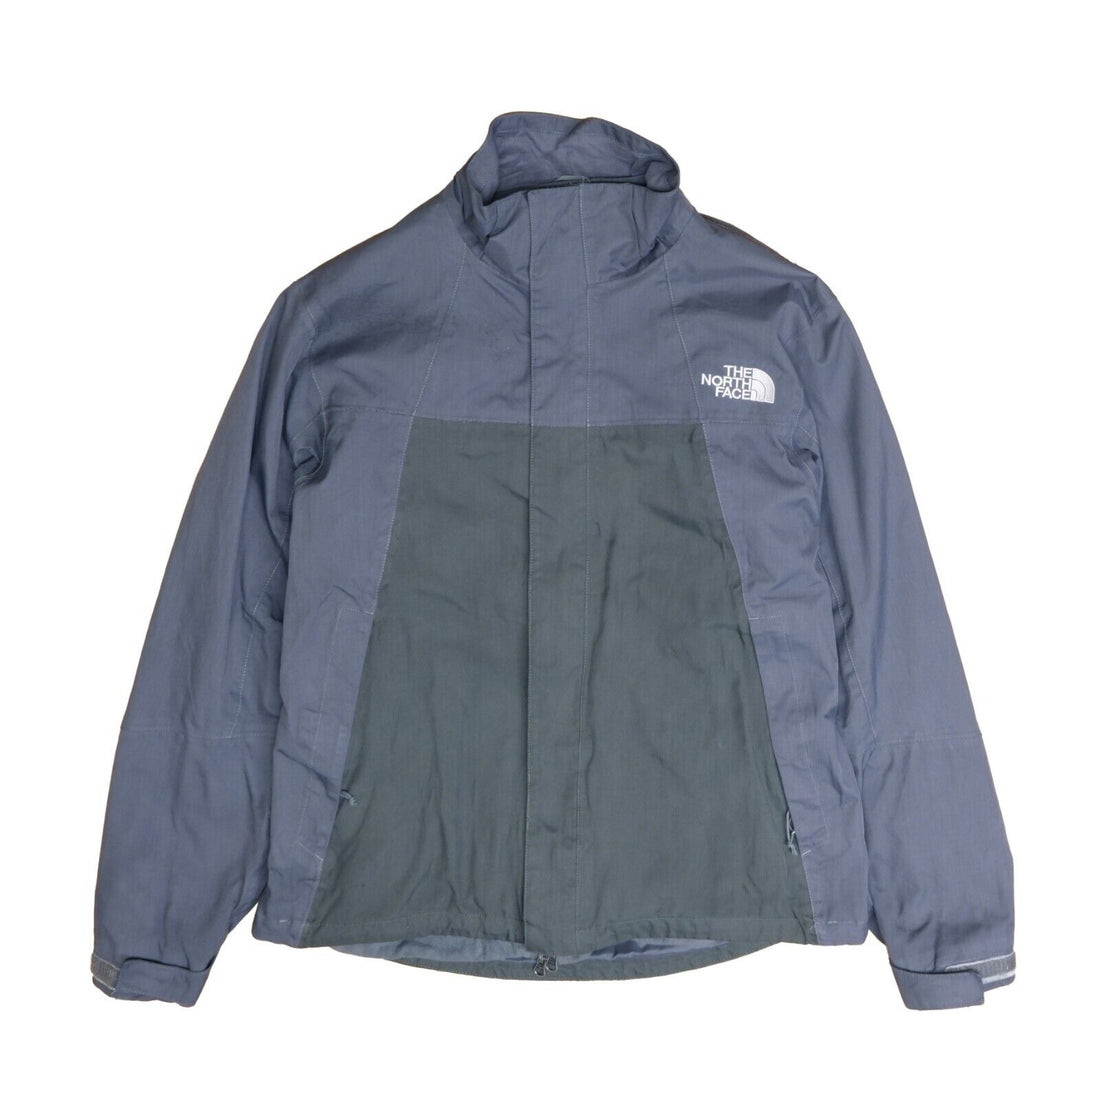 Vintage The North Face Hyvent Waterproof Jacket | Size L - Brick Vintage